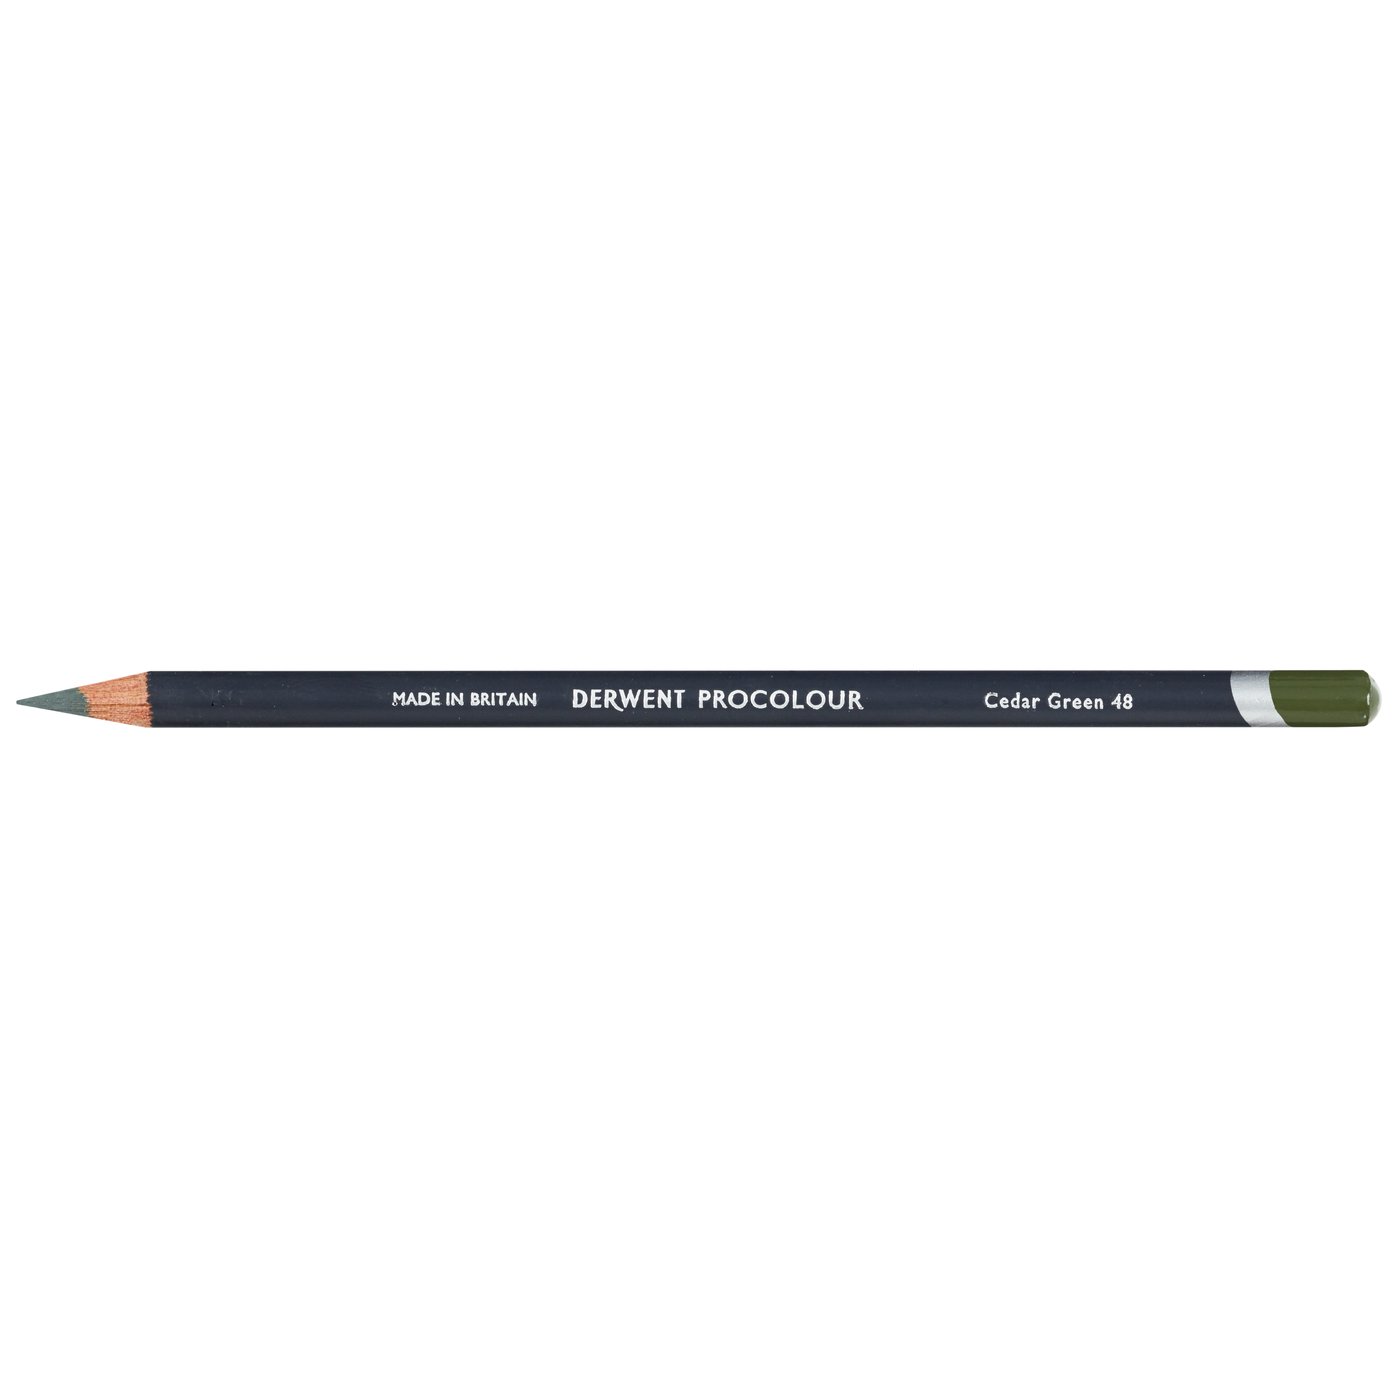 Derwent Procolour Pencil - 48 Cedar Green